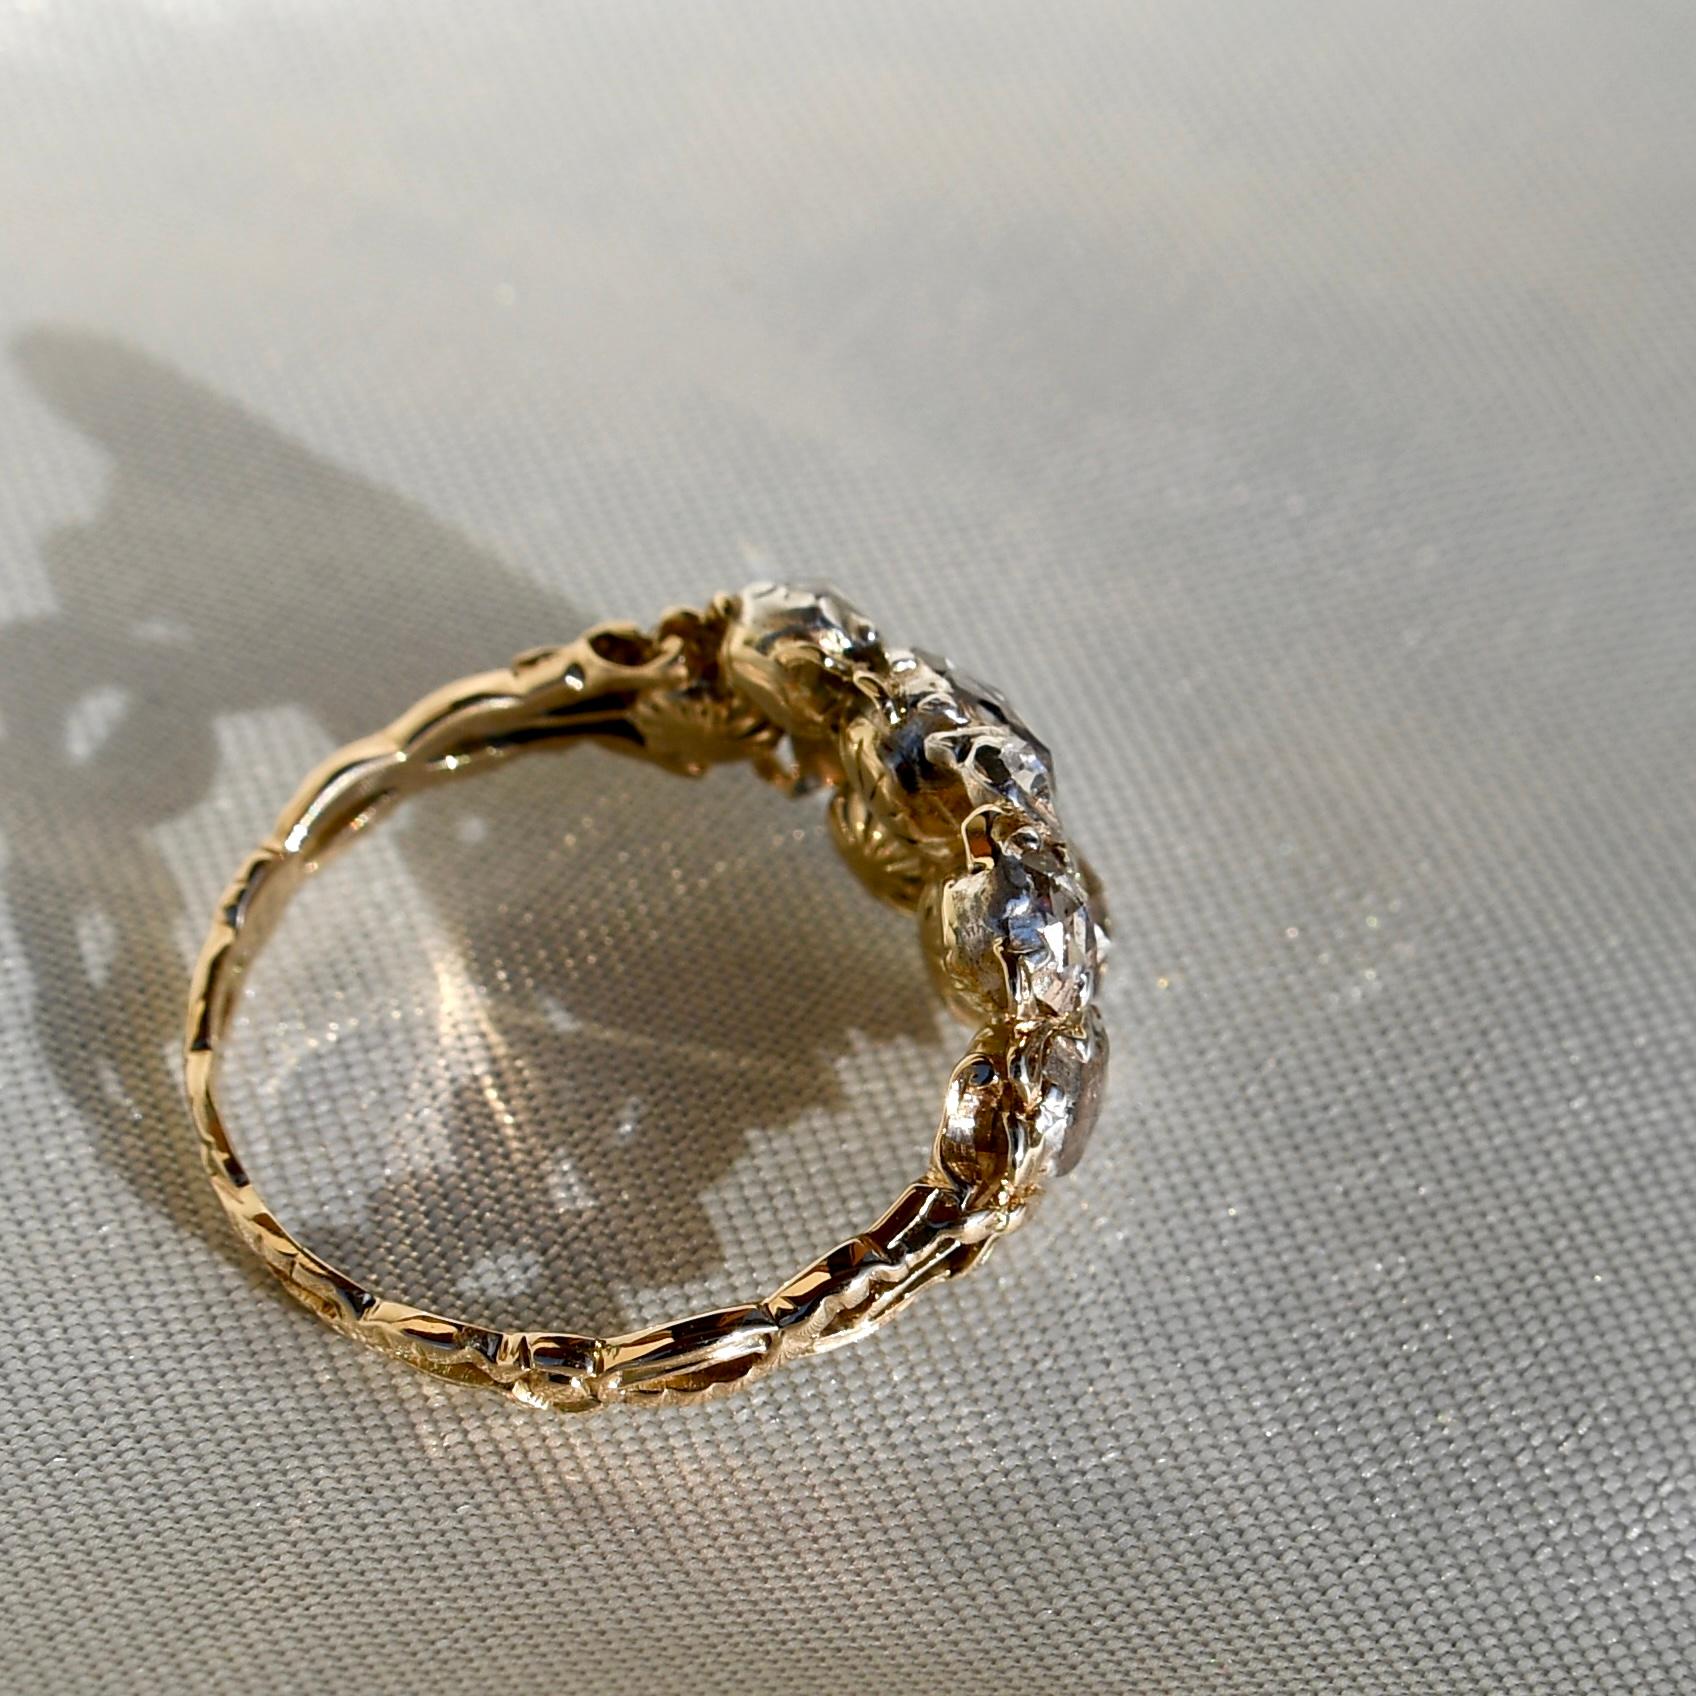 Antique Rococo rose cut diamond Giardinetti ring, France around 1760 For Sale 1